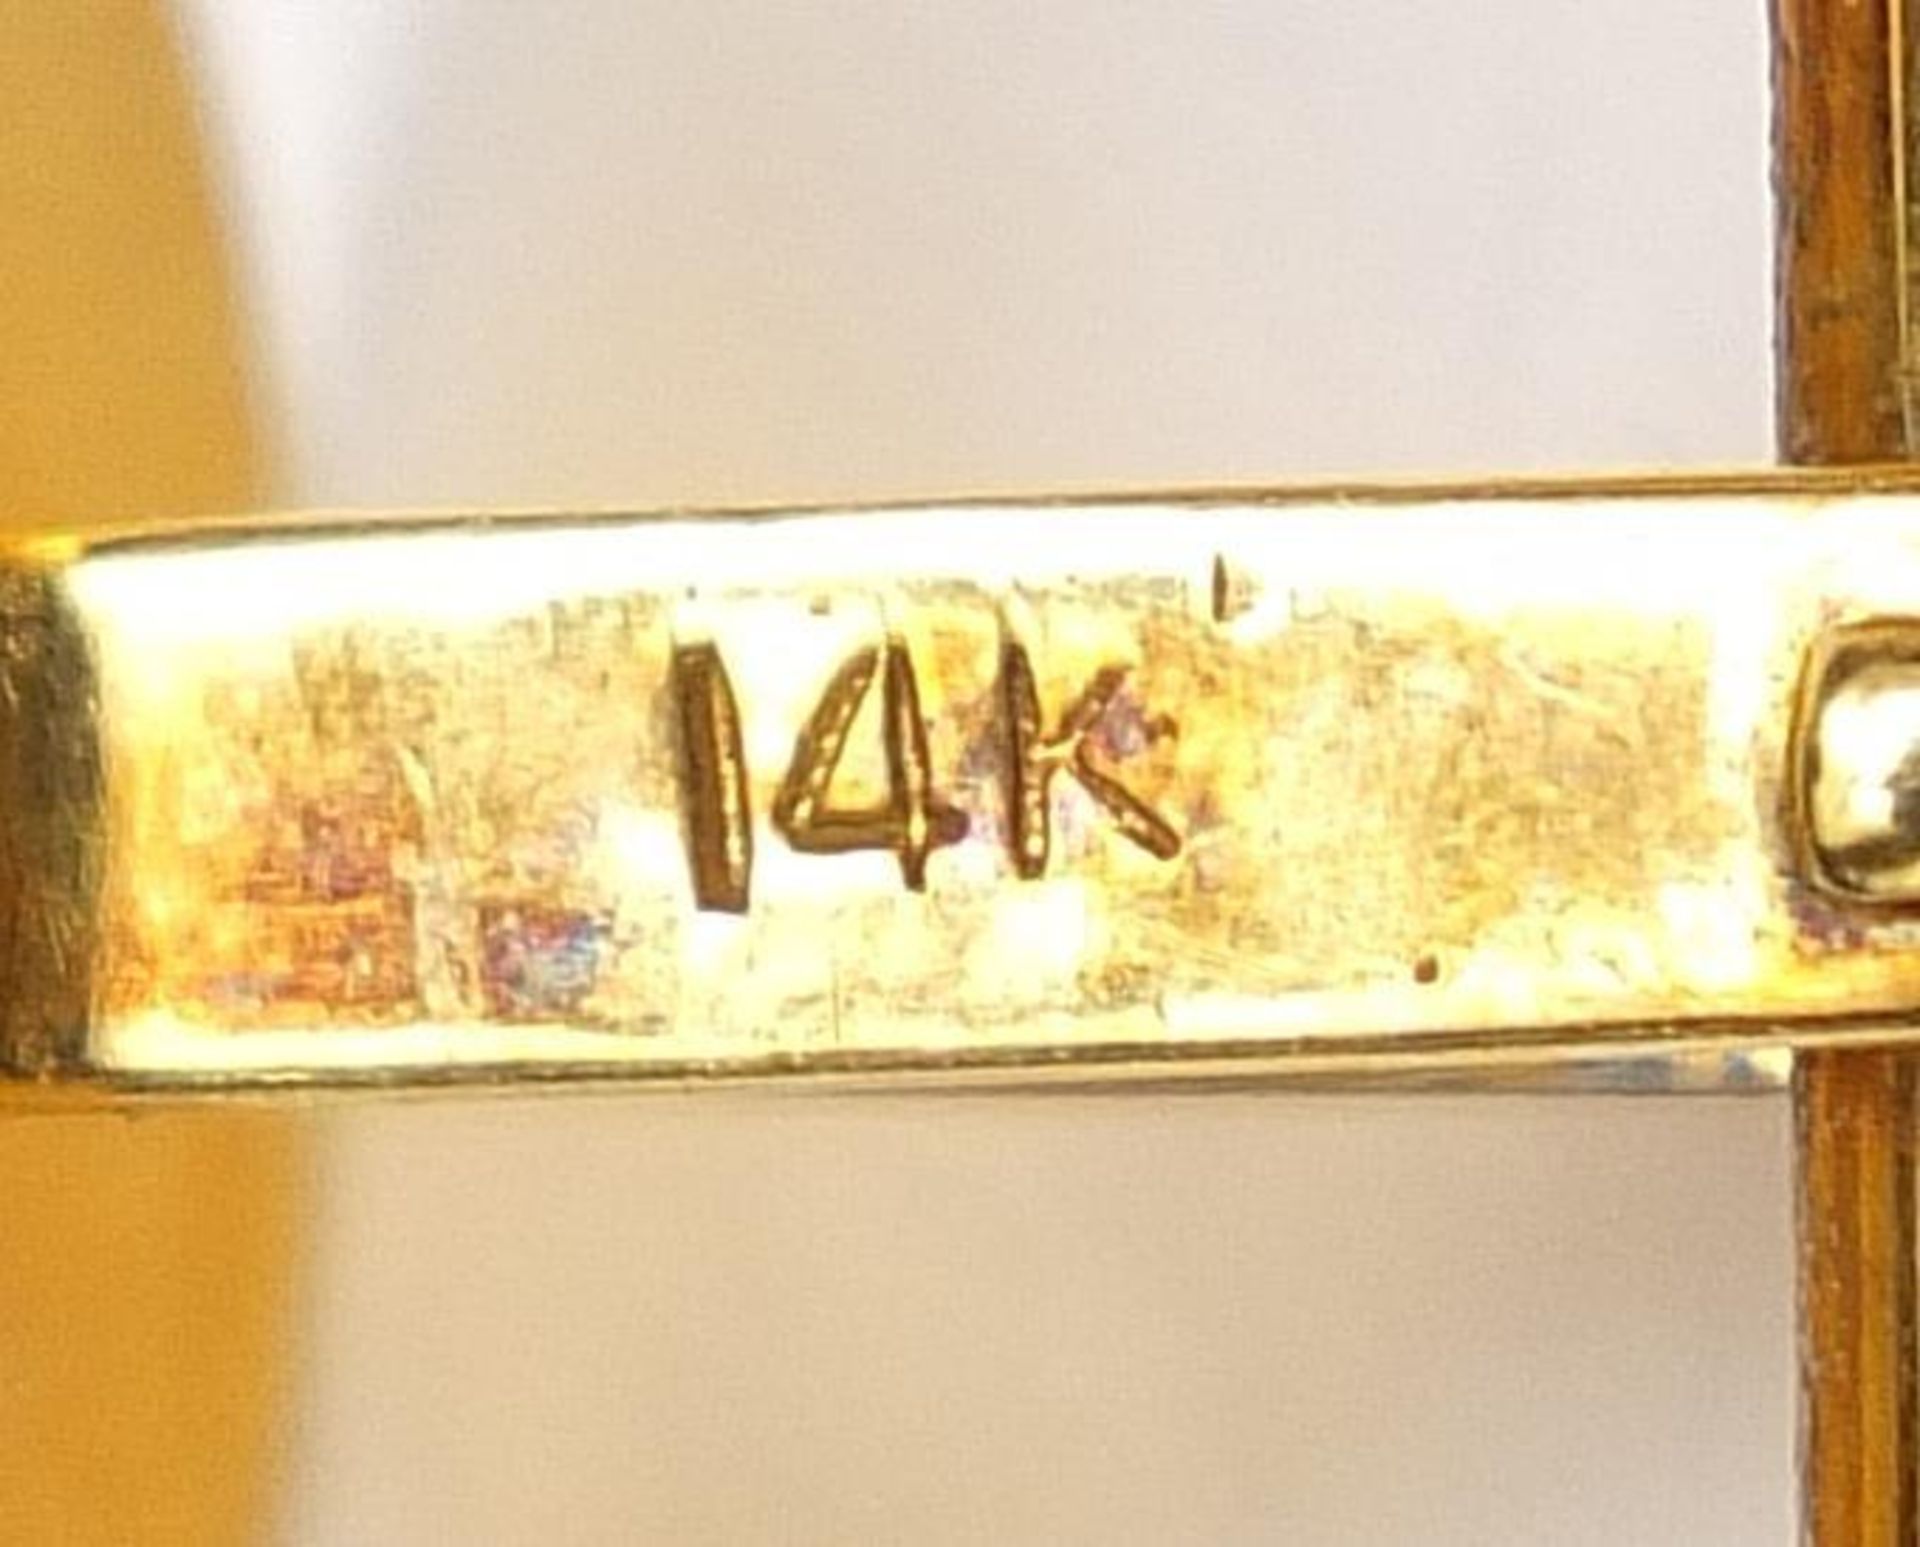 Pair of Chinese 14ct gold cufflinks, 2cm in diameter, 7.0g : - Image 3 of 3